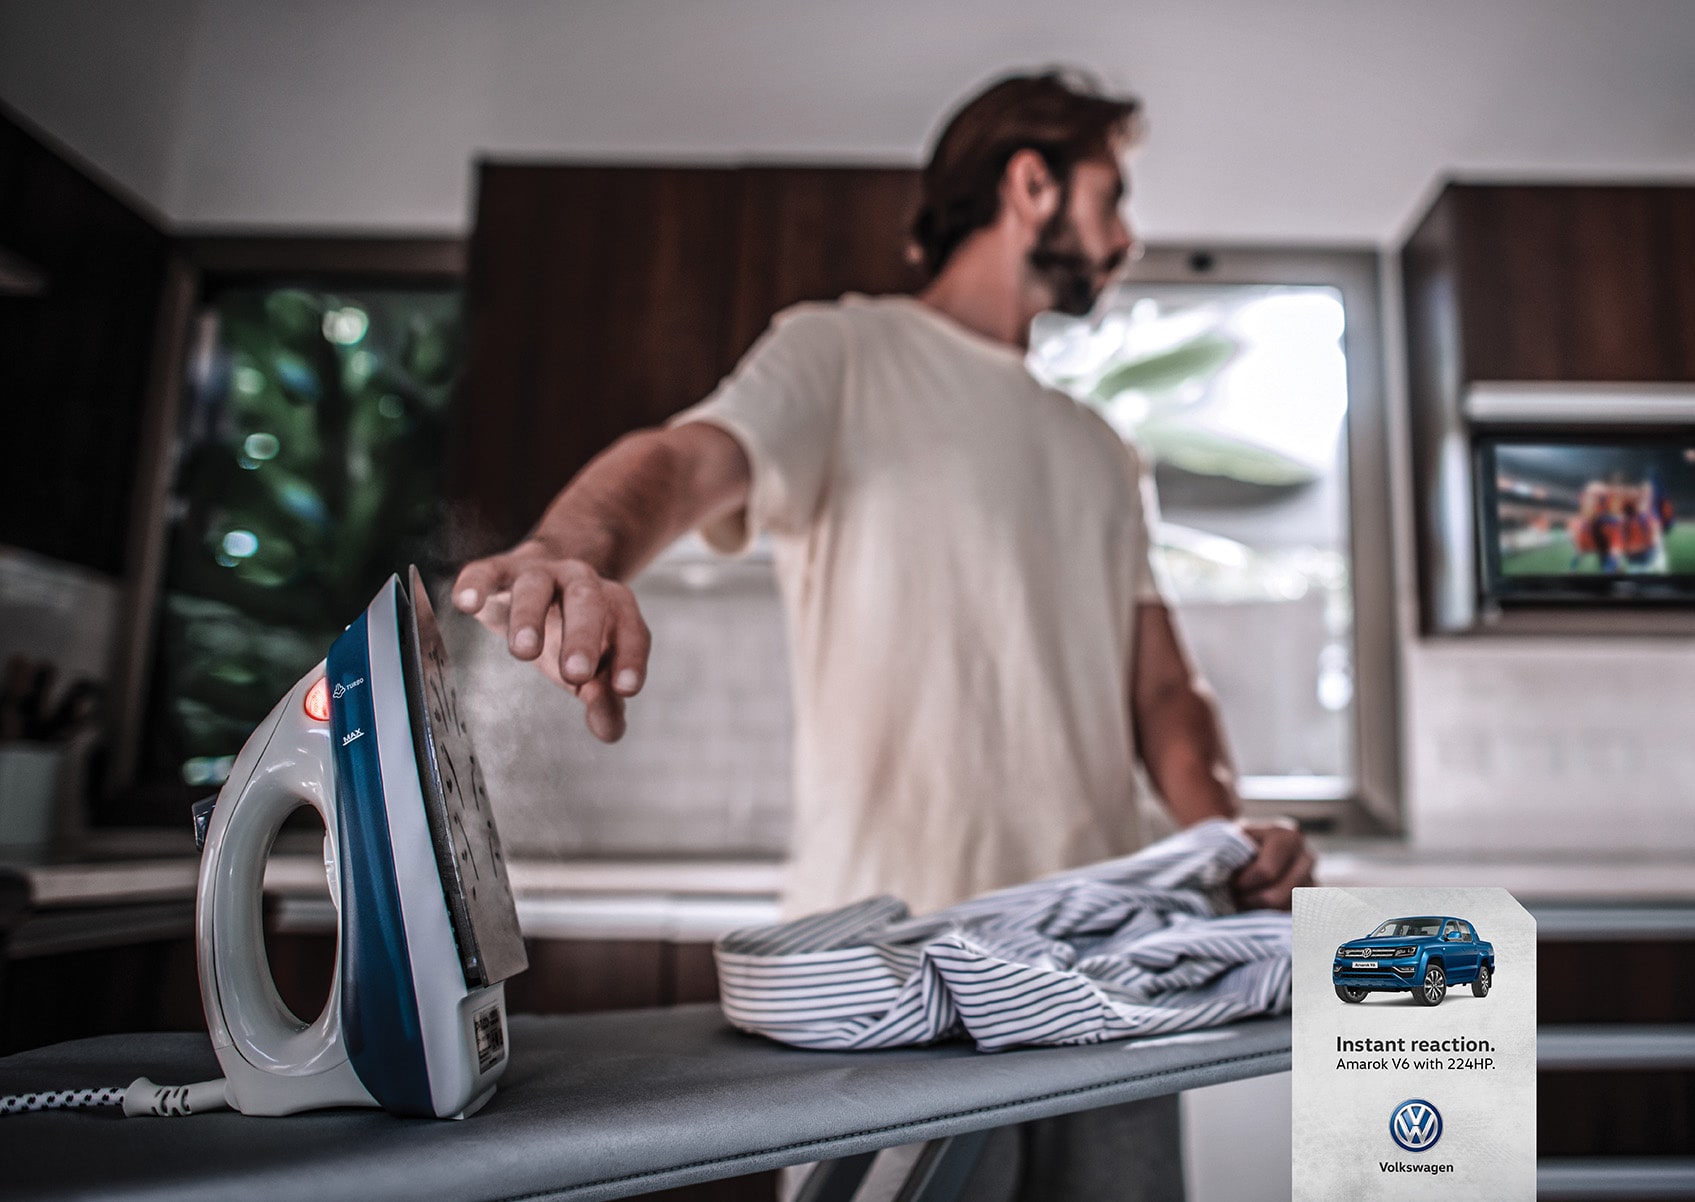 Volkswagen Amarok V6 Reactions | Print campaign